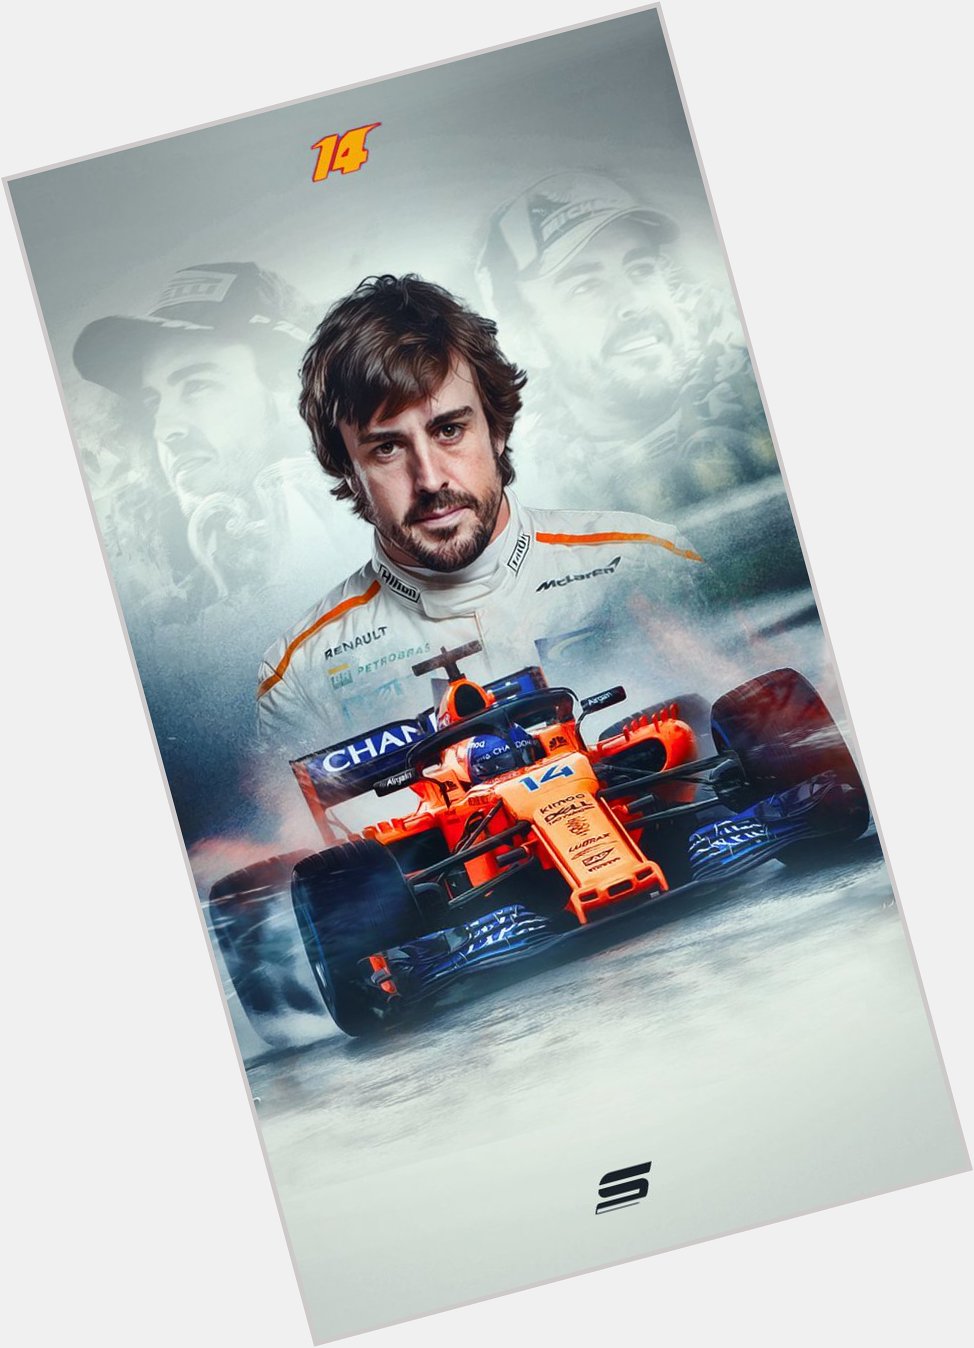 Happy birthday Fernando Alonso Wallpaper 2018. I hope you like it! 